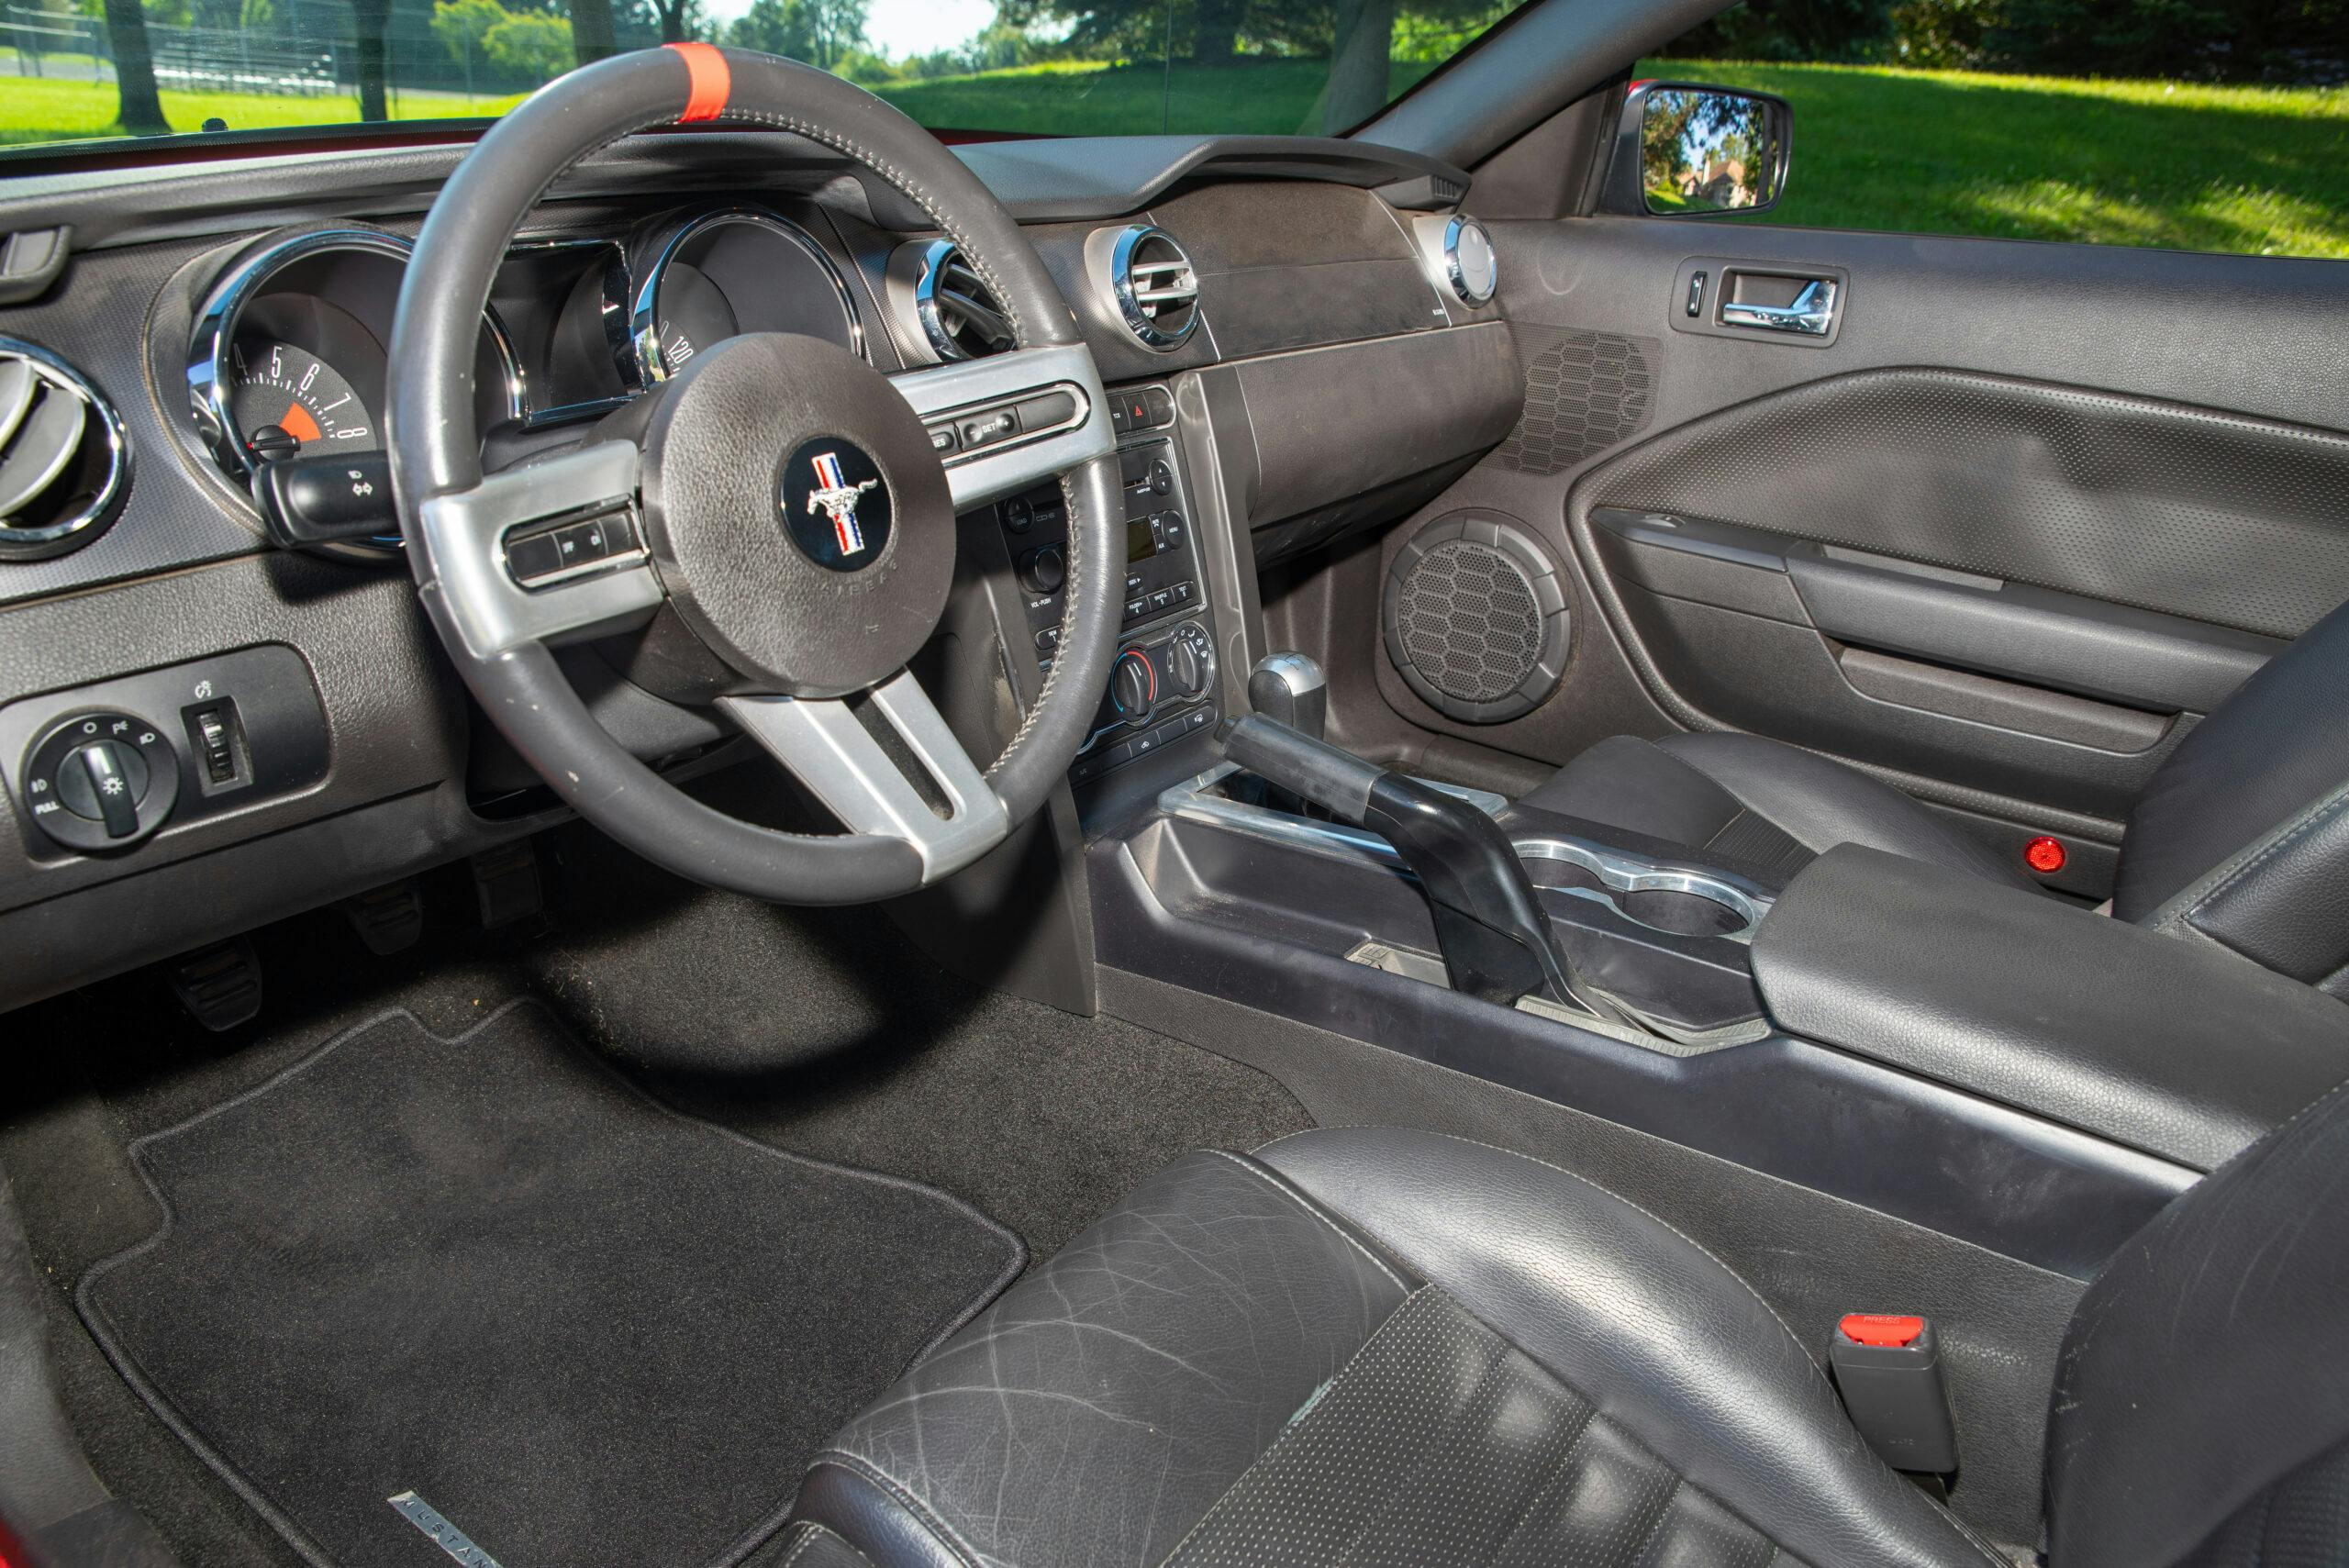 2006 Mustang GT interior angled